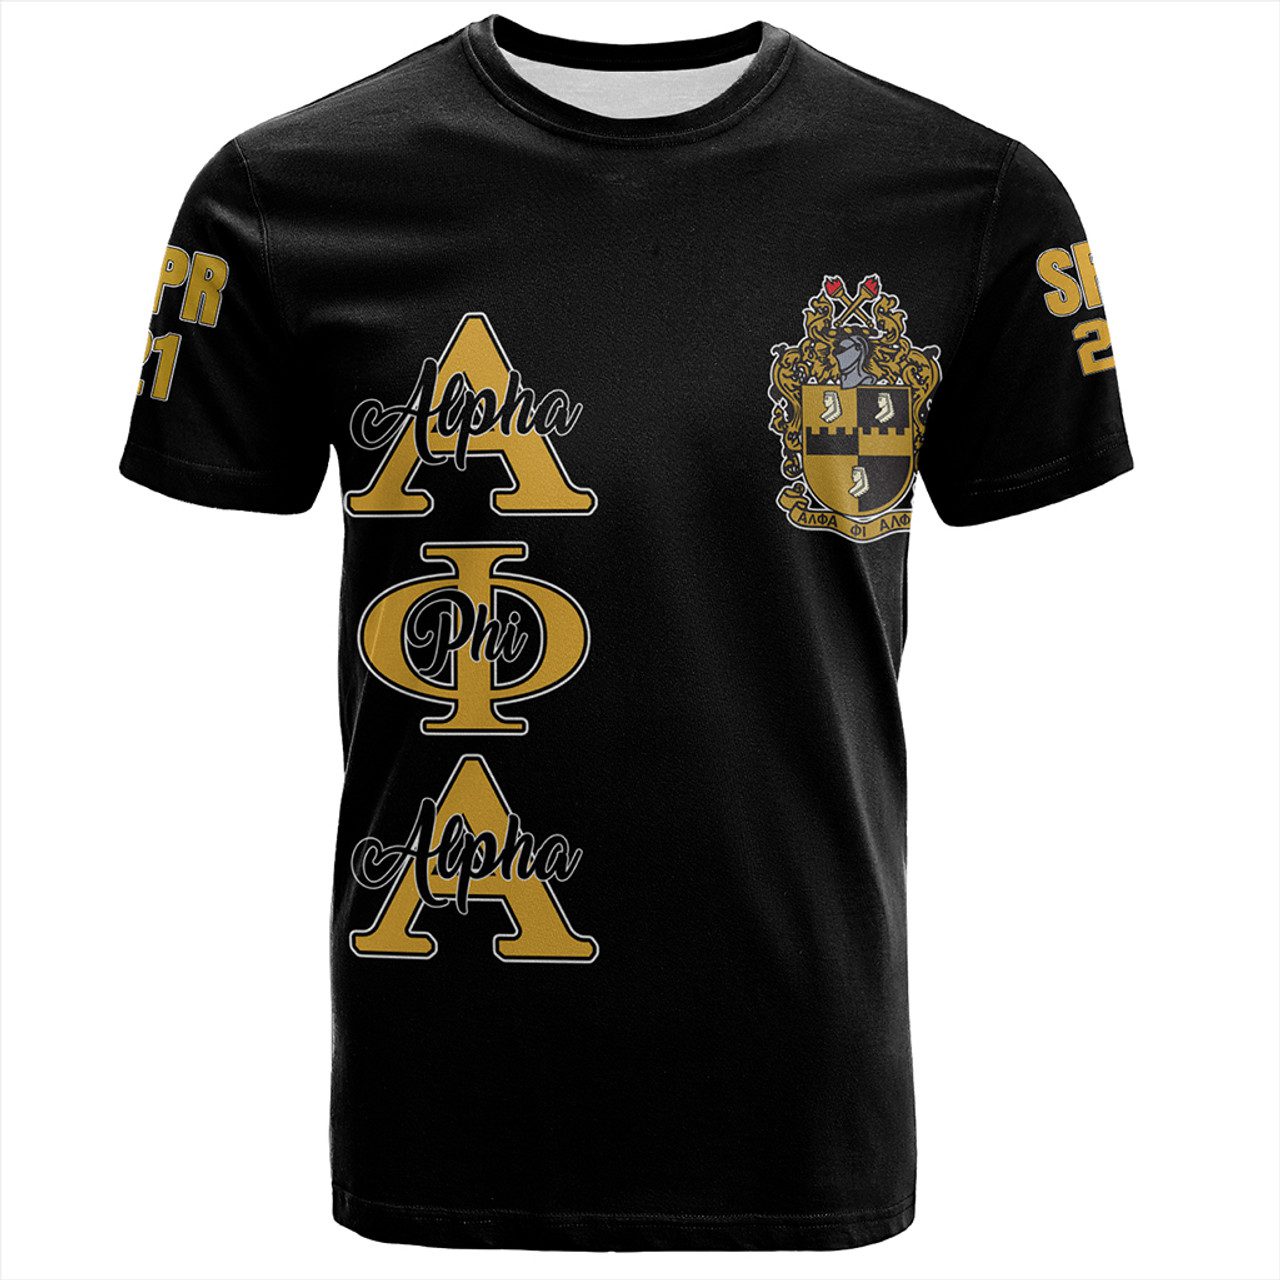 Alpha Phi Alpha T-Shirt Custom Fraternity Black